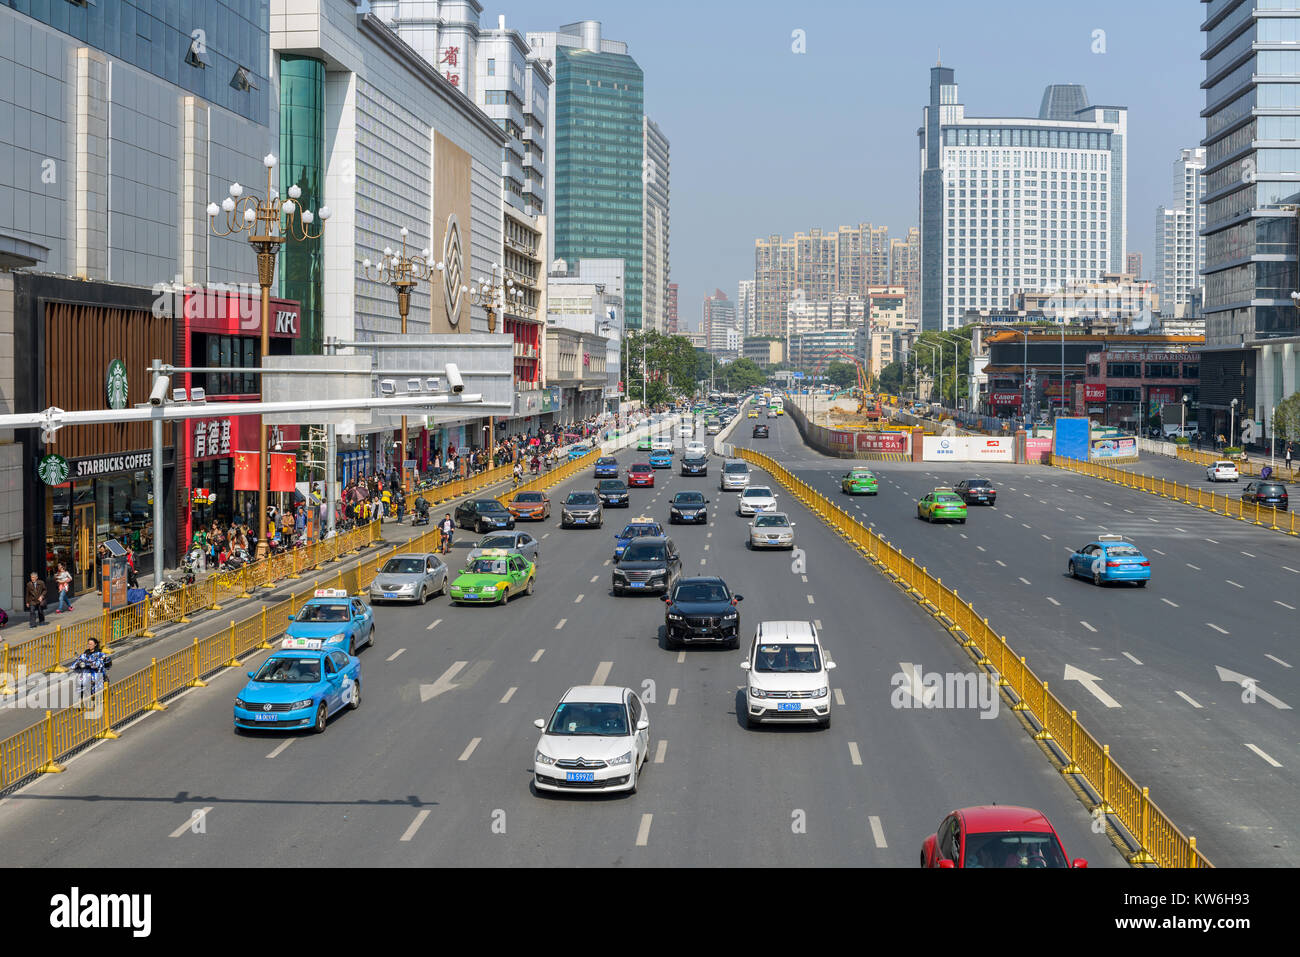 Bayi Boulevard - Il traffico pesante su Bayi Boulevard - la più trafficata strada al centro di Nanchang, Jiangxi, Cina. Foto Stock